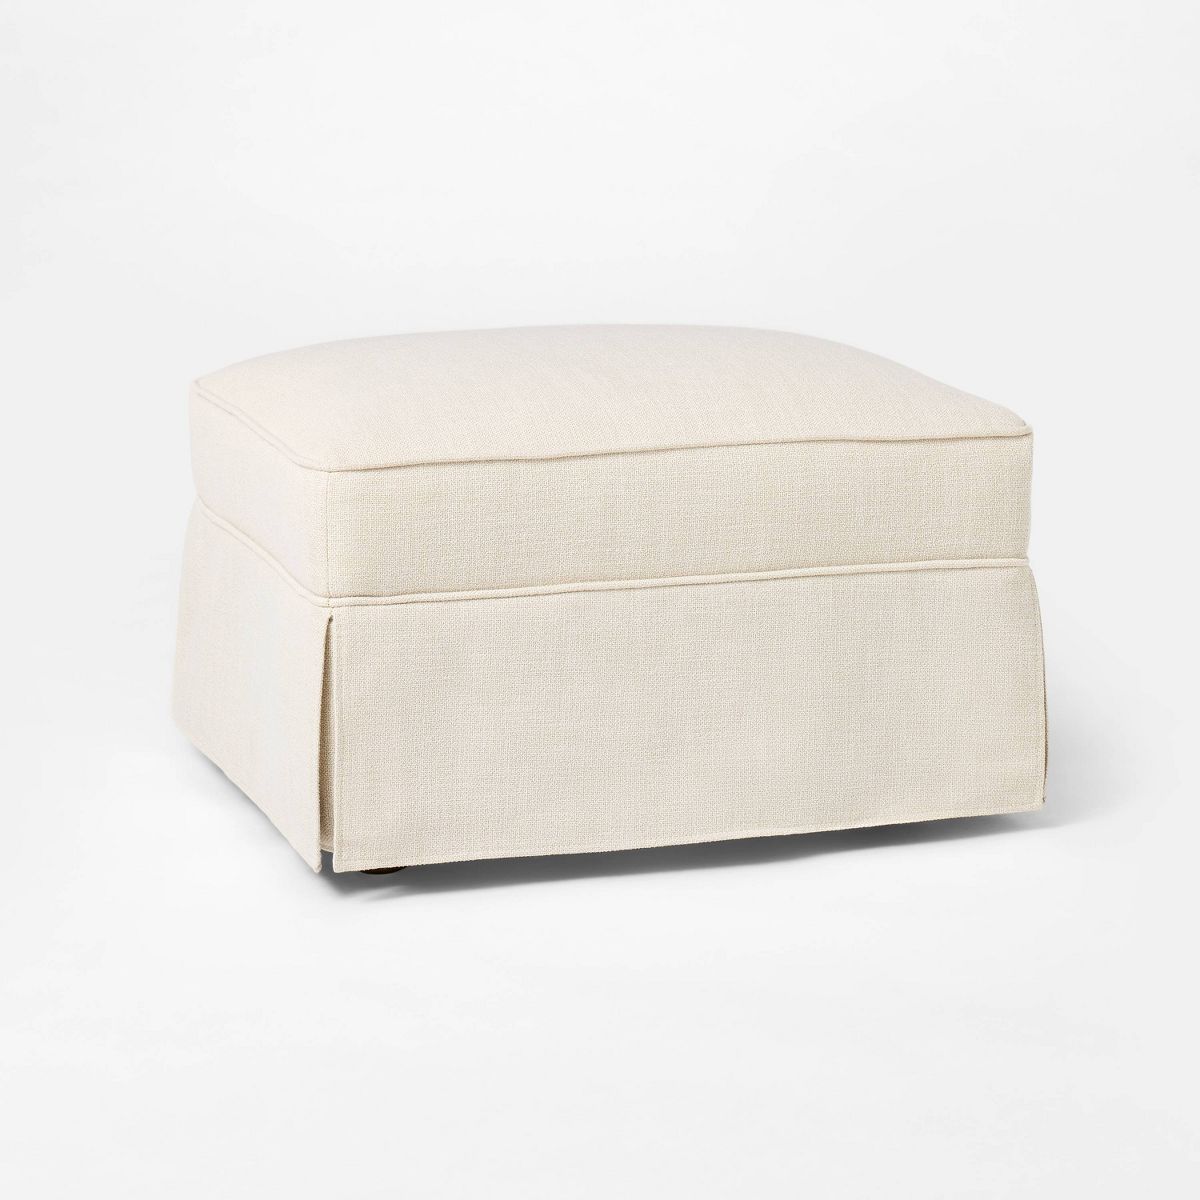 Vivian Park Slipcover Ottoman - Threshold™ designed with Studio McGee | Target